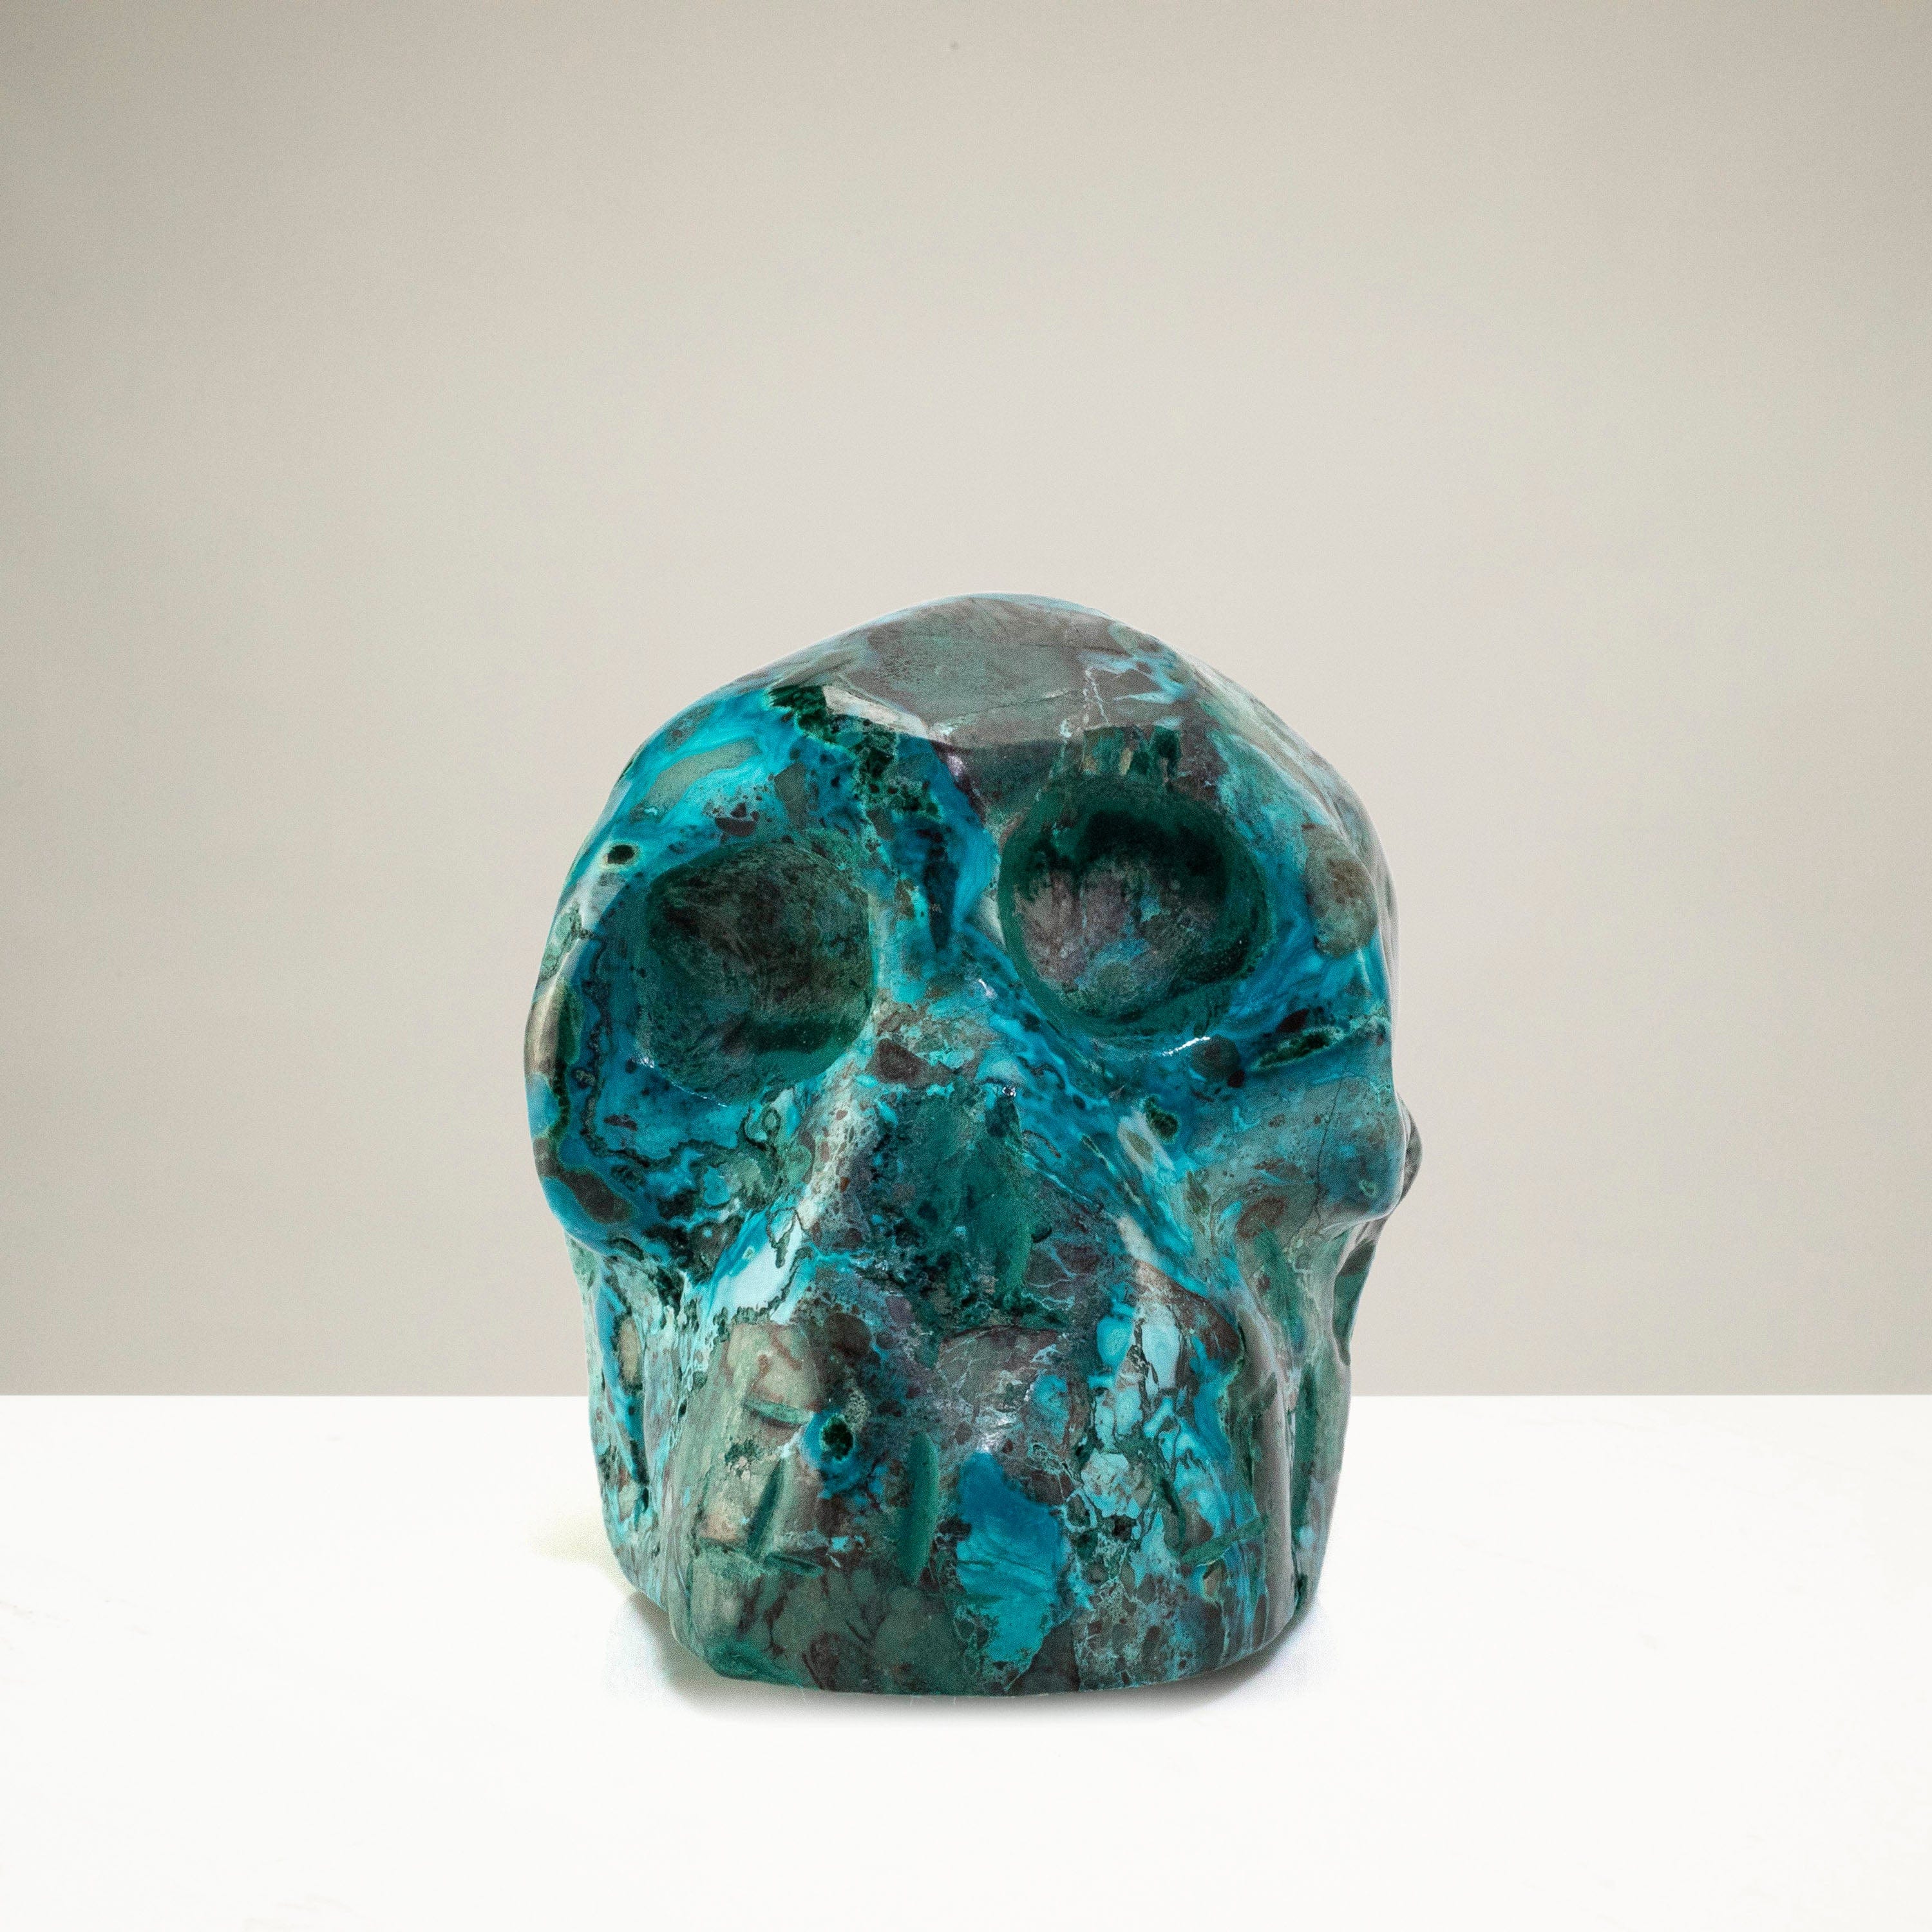 Kalifano Malachite Chrysocolla Skull Carving 2.5" / 200g SK800-CRY.002